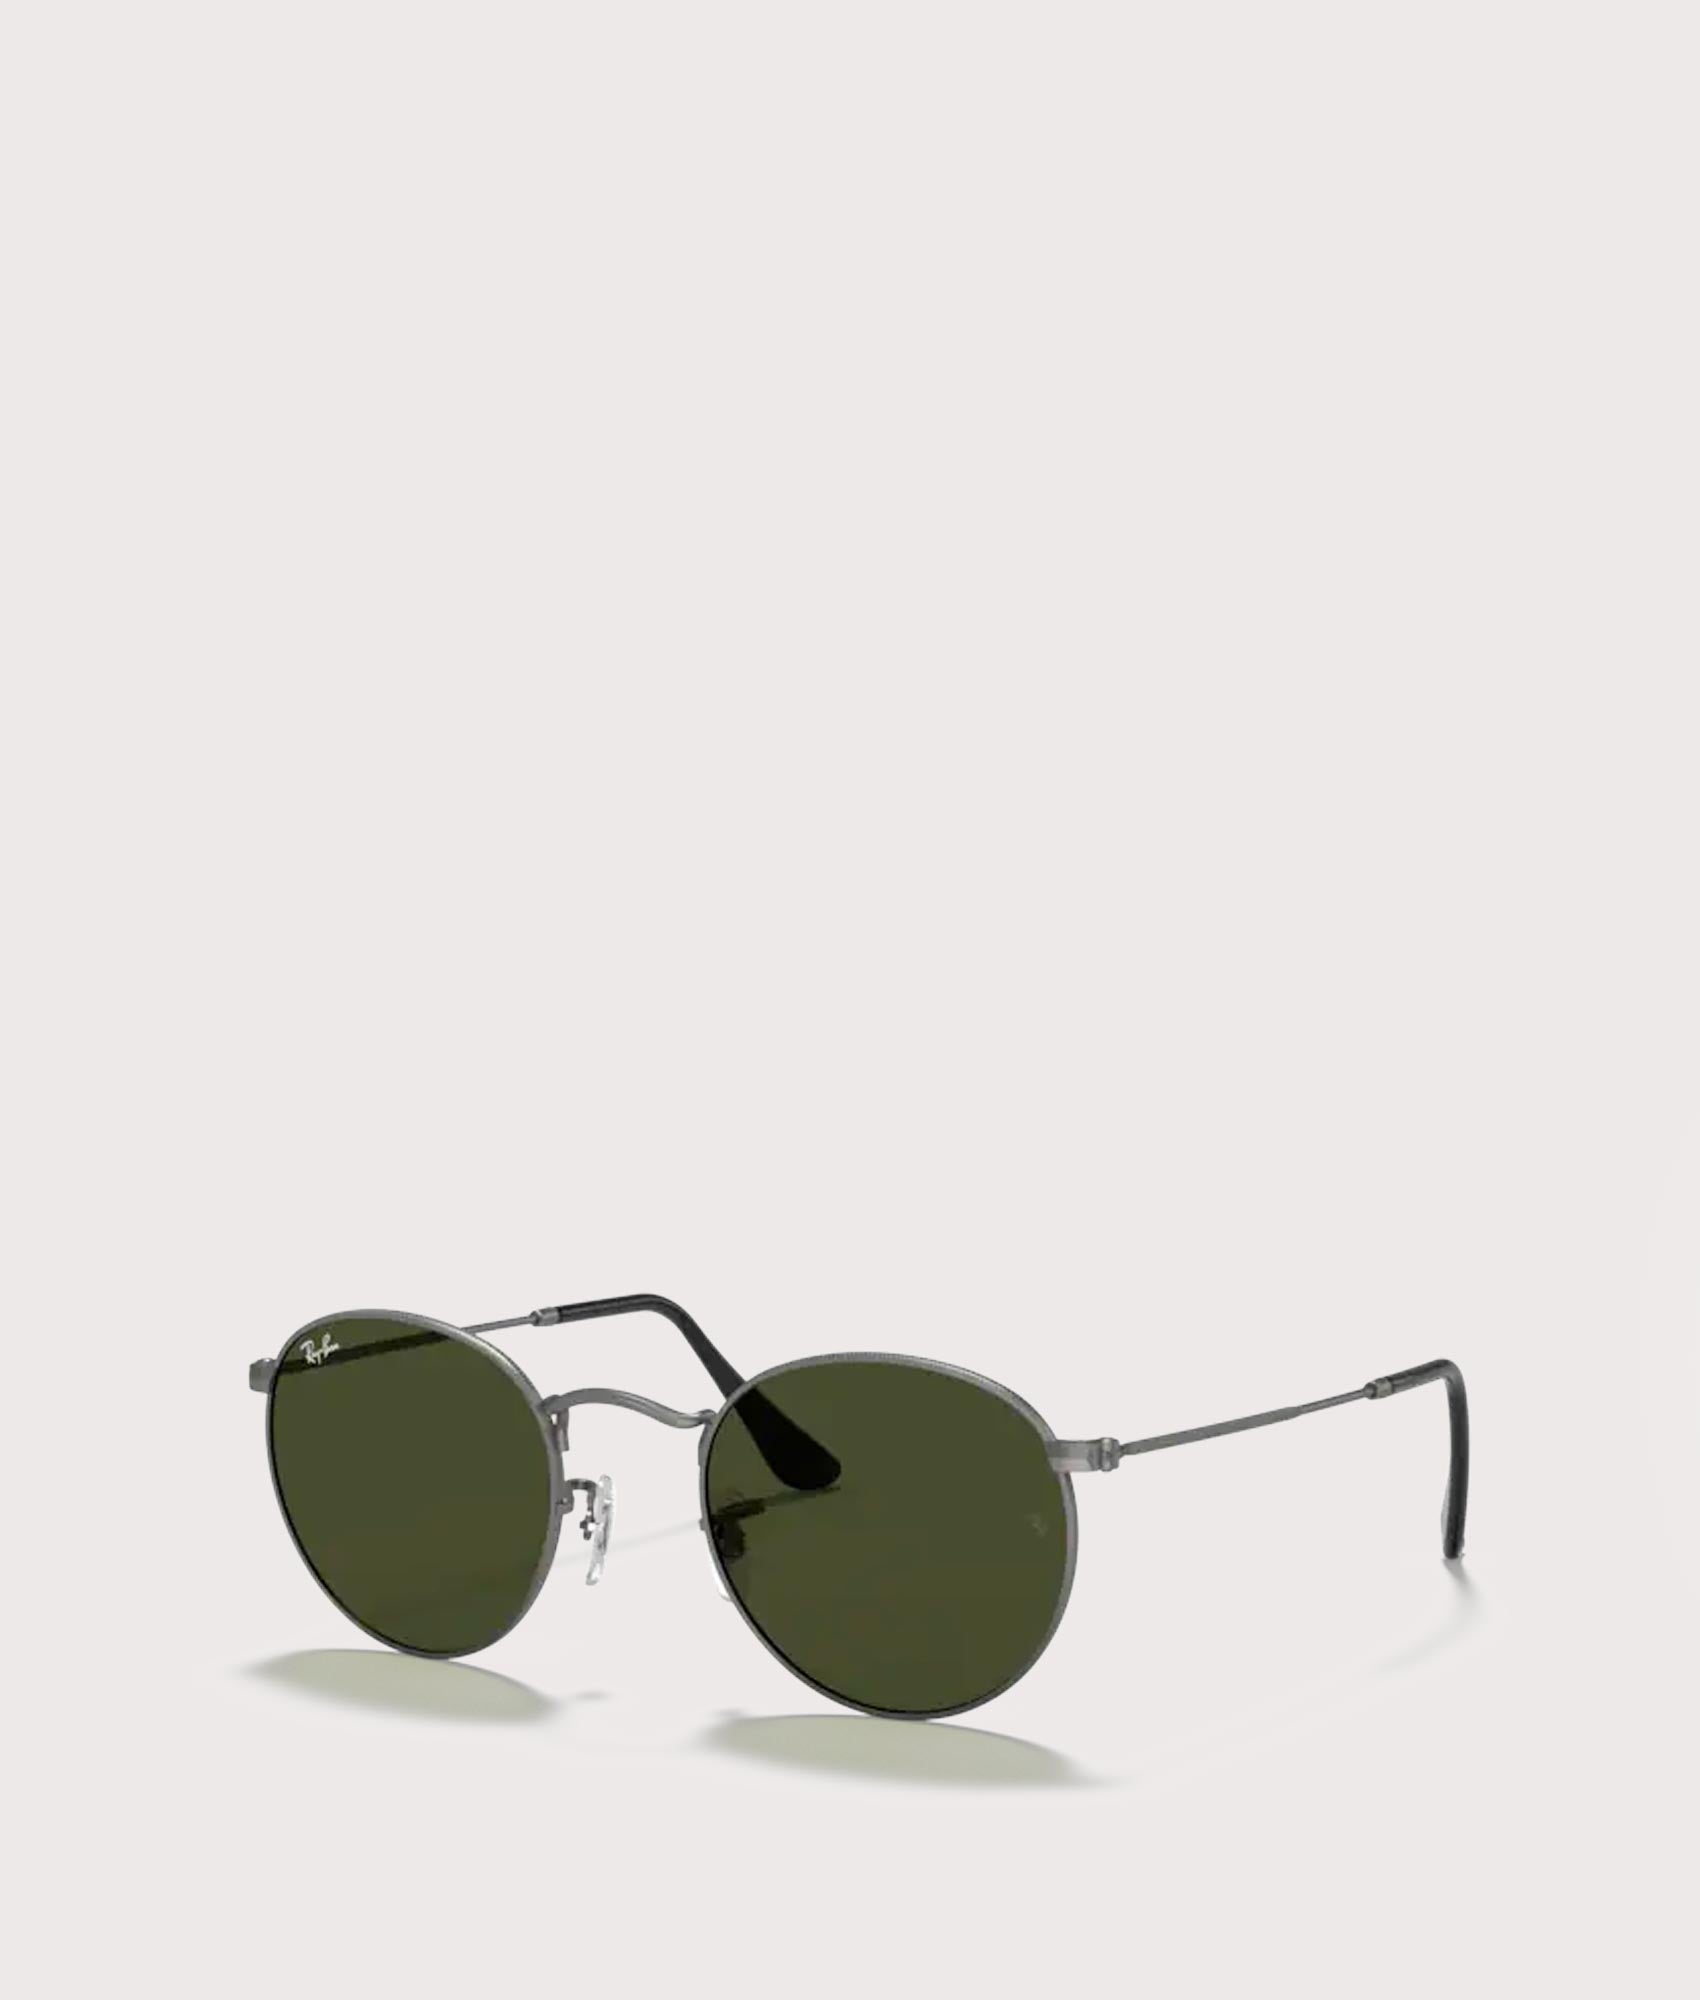 Ray-Ban Mens Round Metal Sunglasses - Colour: 029 Matte Gunmetal-Green Lens - Size: 50